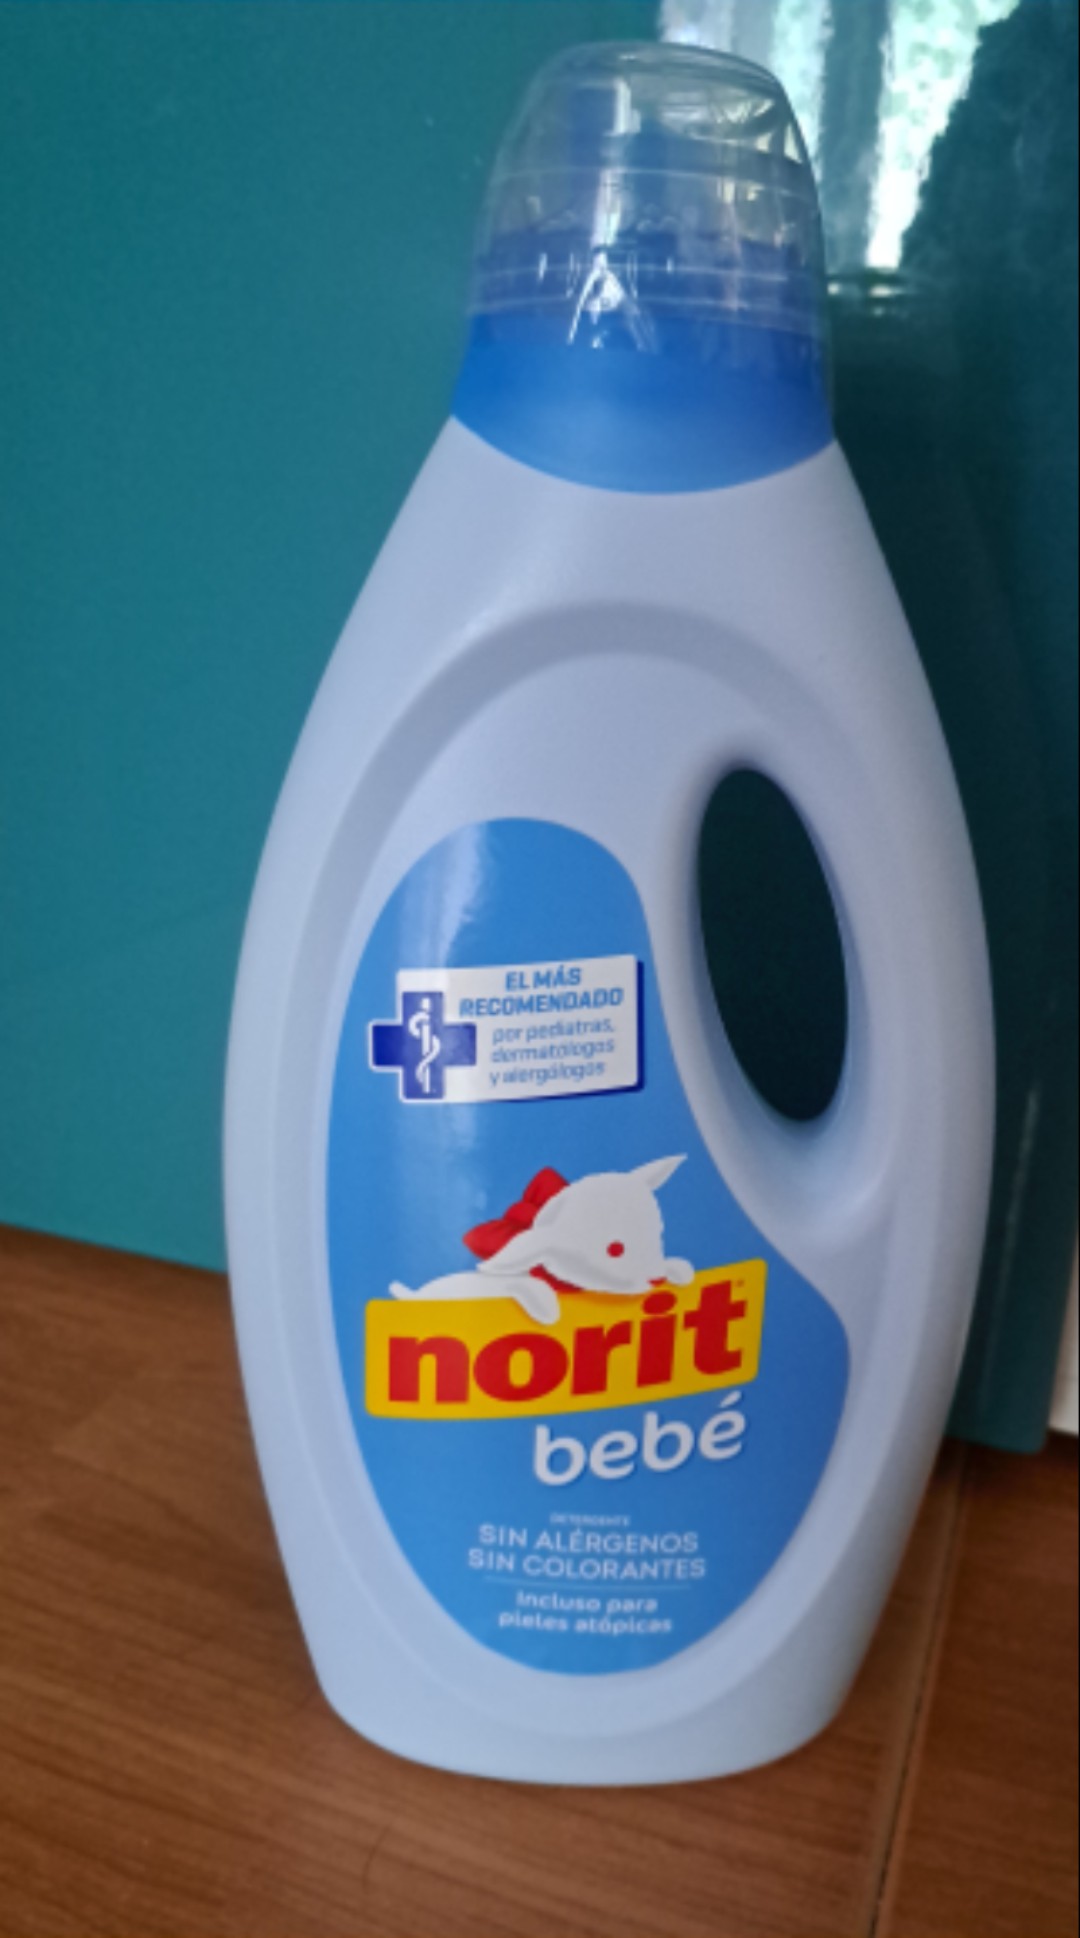 Detergente Norit bebé 1125ml